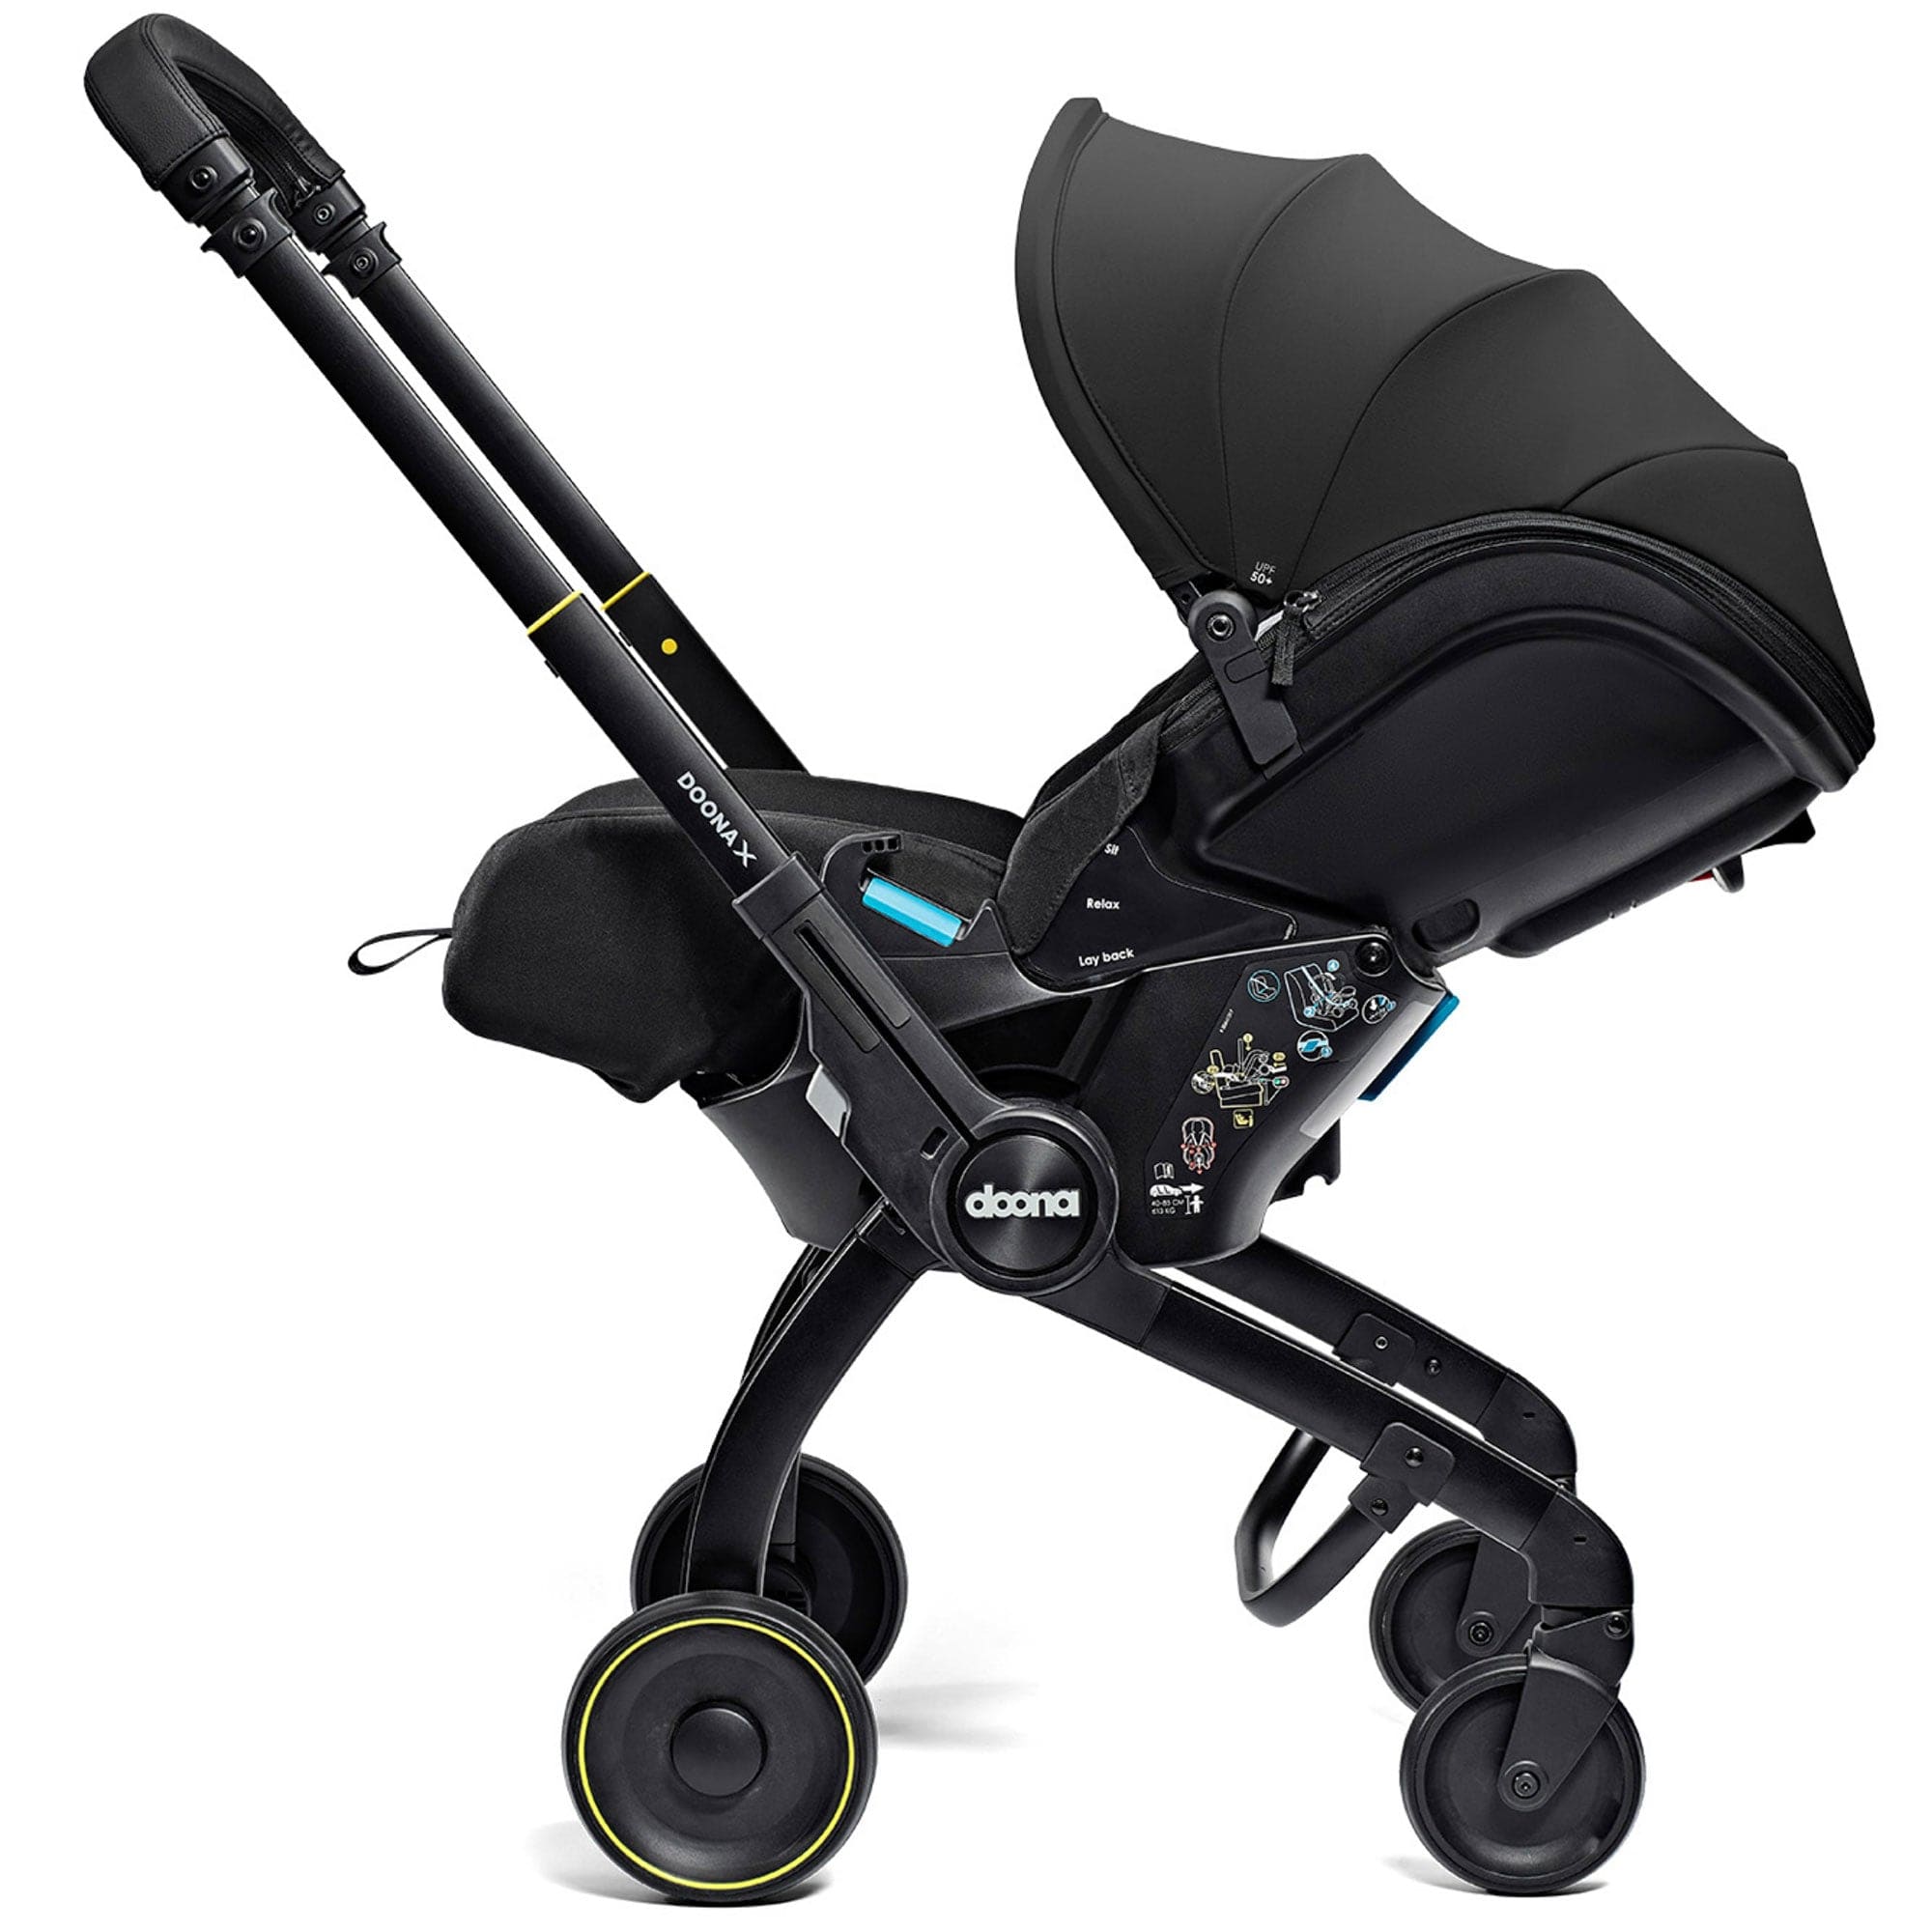 Doona baby car seats Doona X Infant Car Seat Stroller Nitro Black CAR/SPA/706441